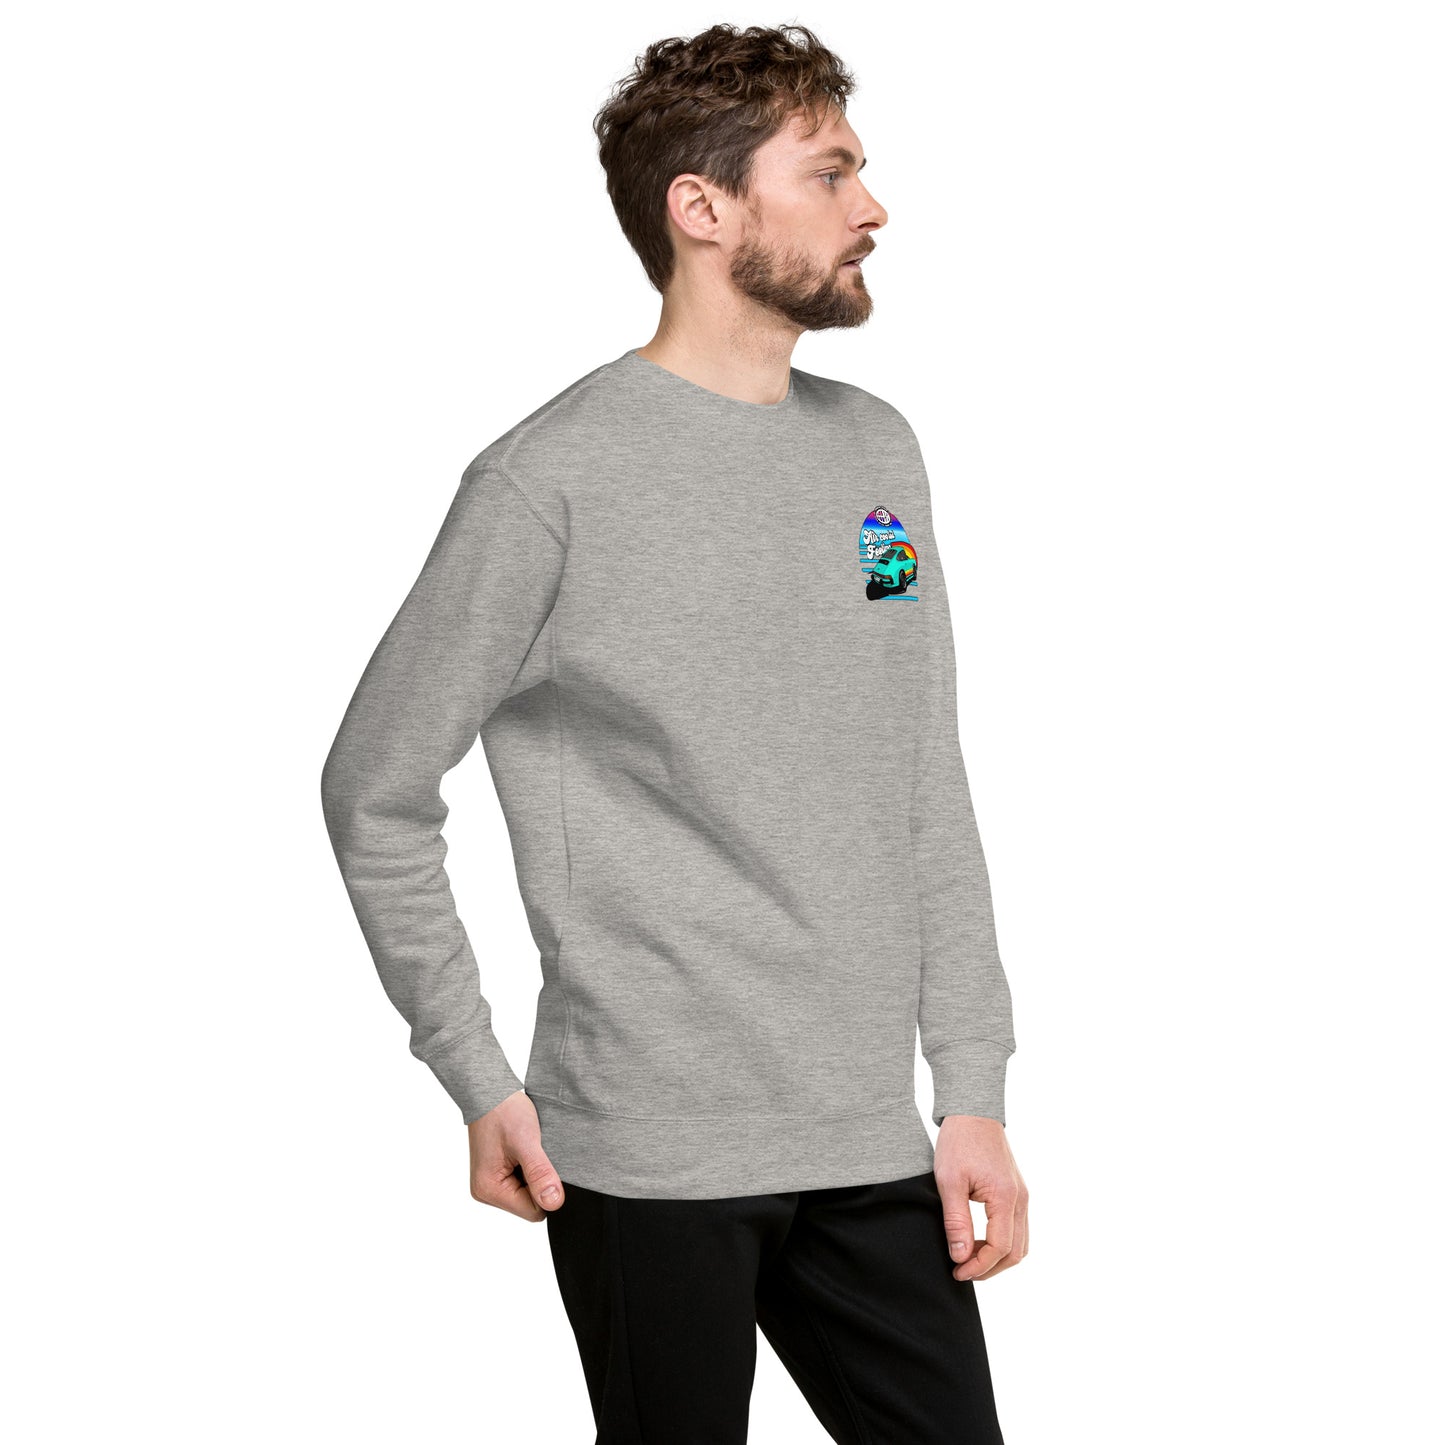 930 "Air Cooled Feeling" unisex sweatshirt